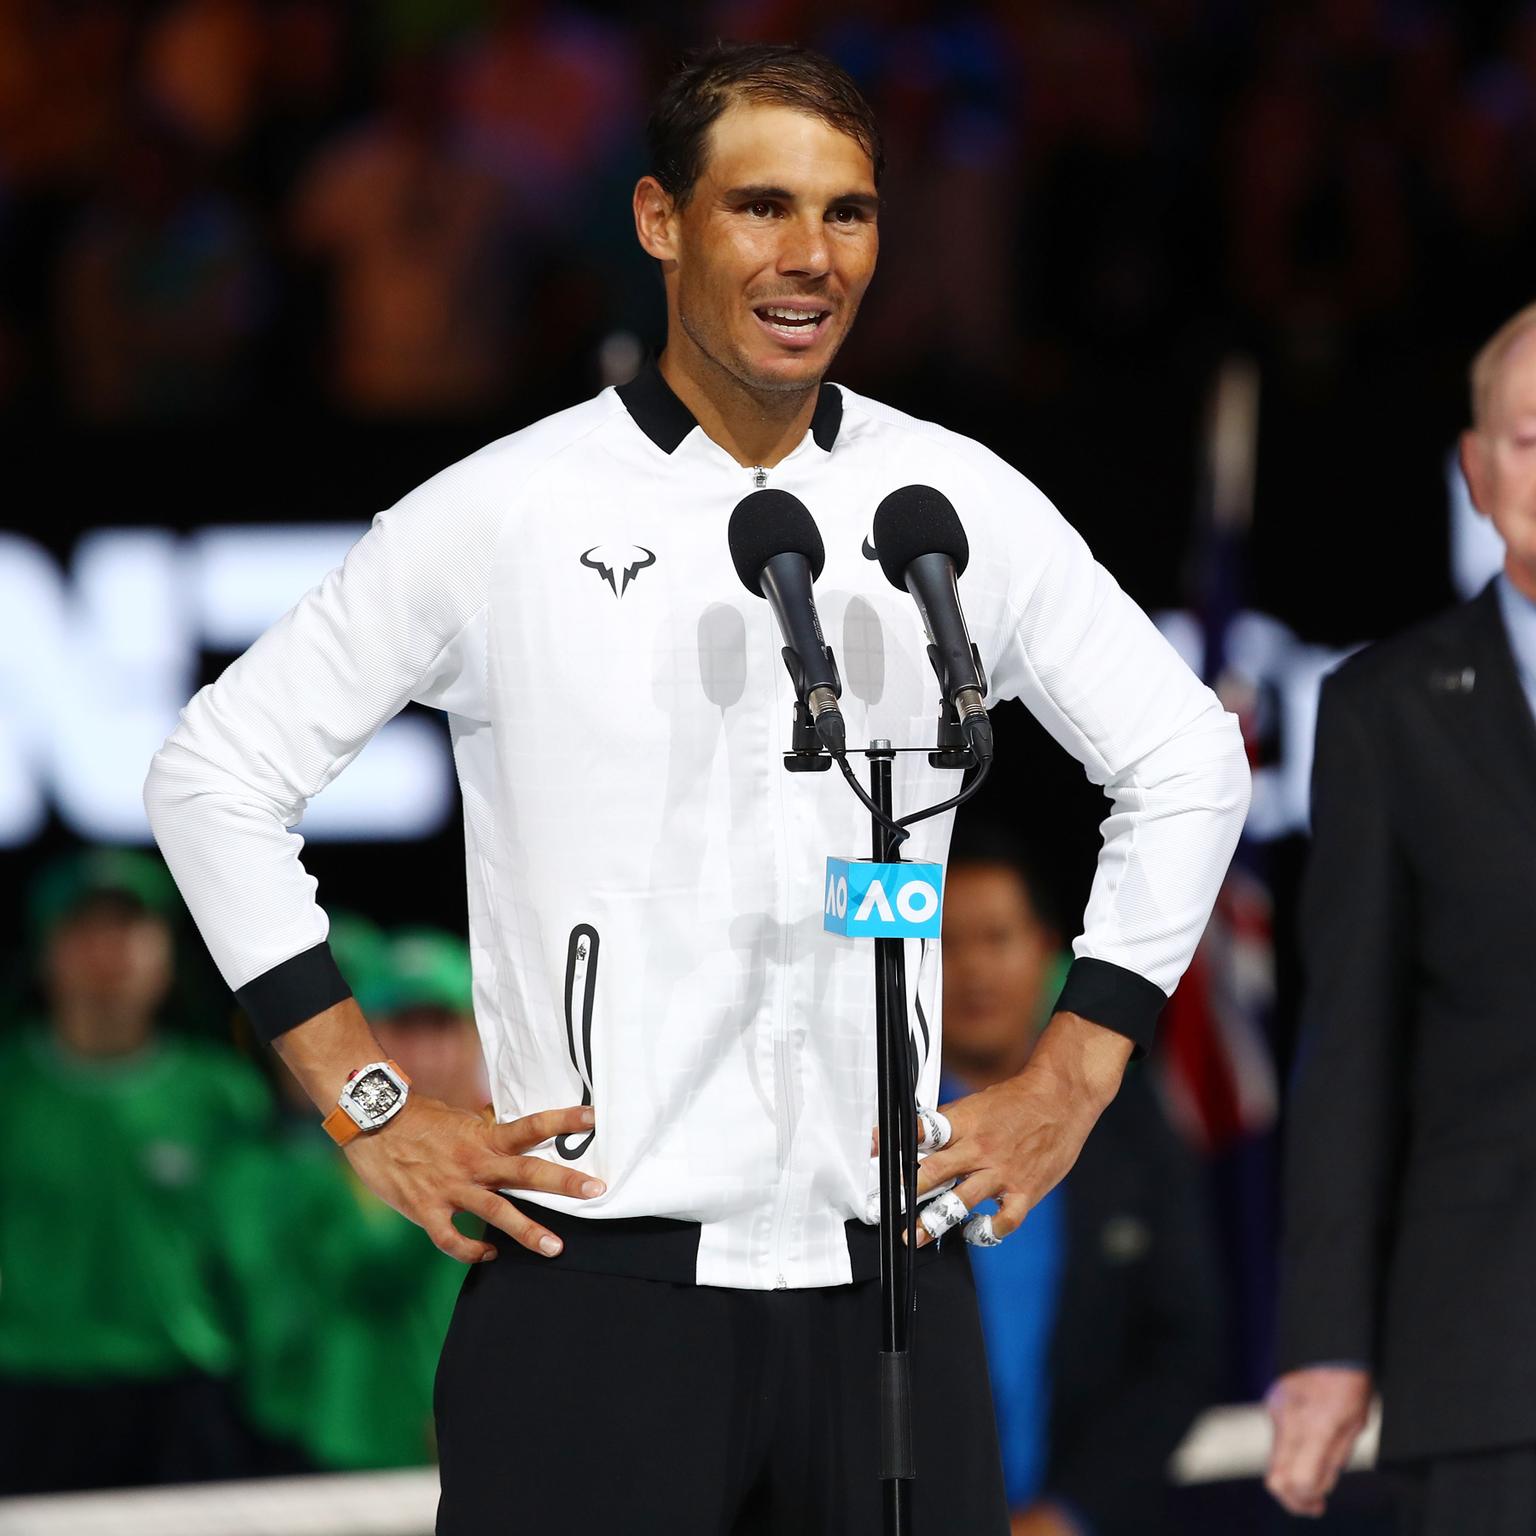 Rafael Nadal accepts his defeat against Roger Federer in 2017 Australian Open wearing a Richard Mille wath